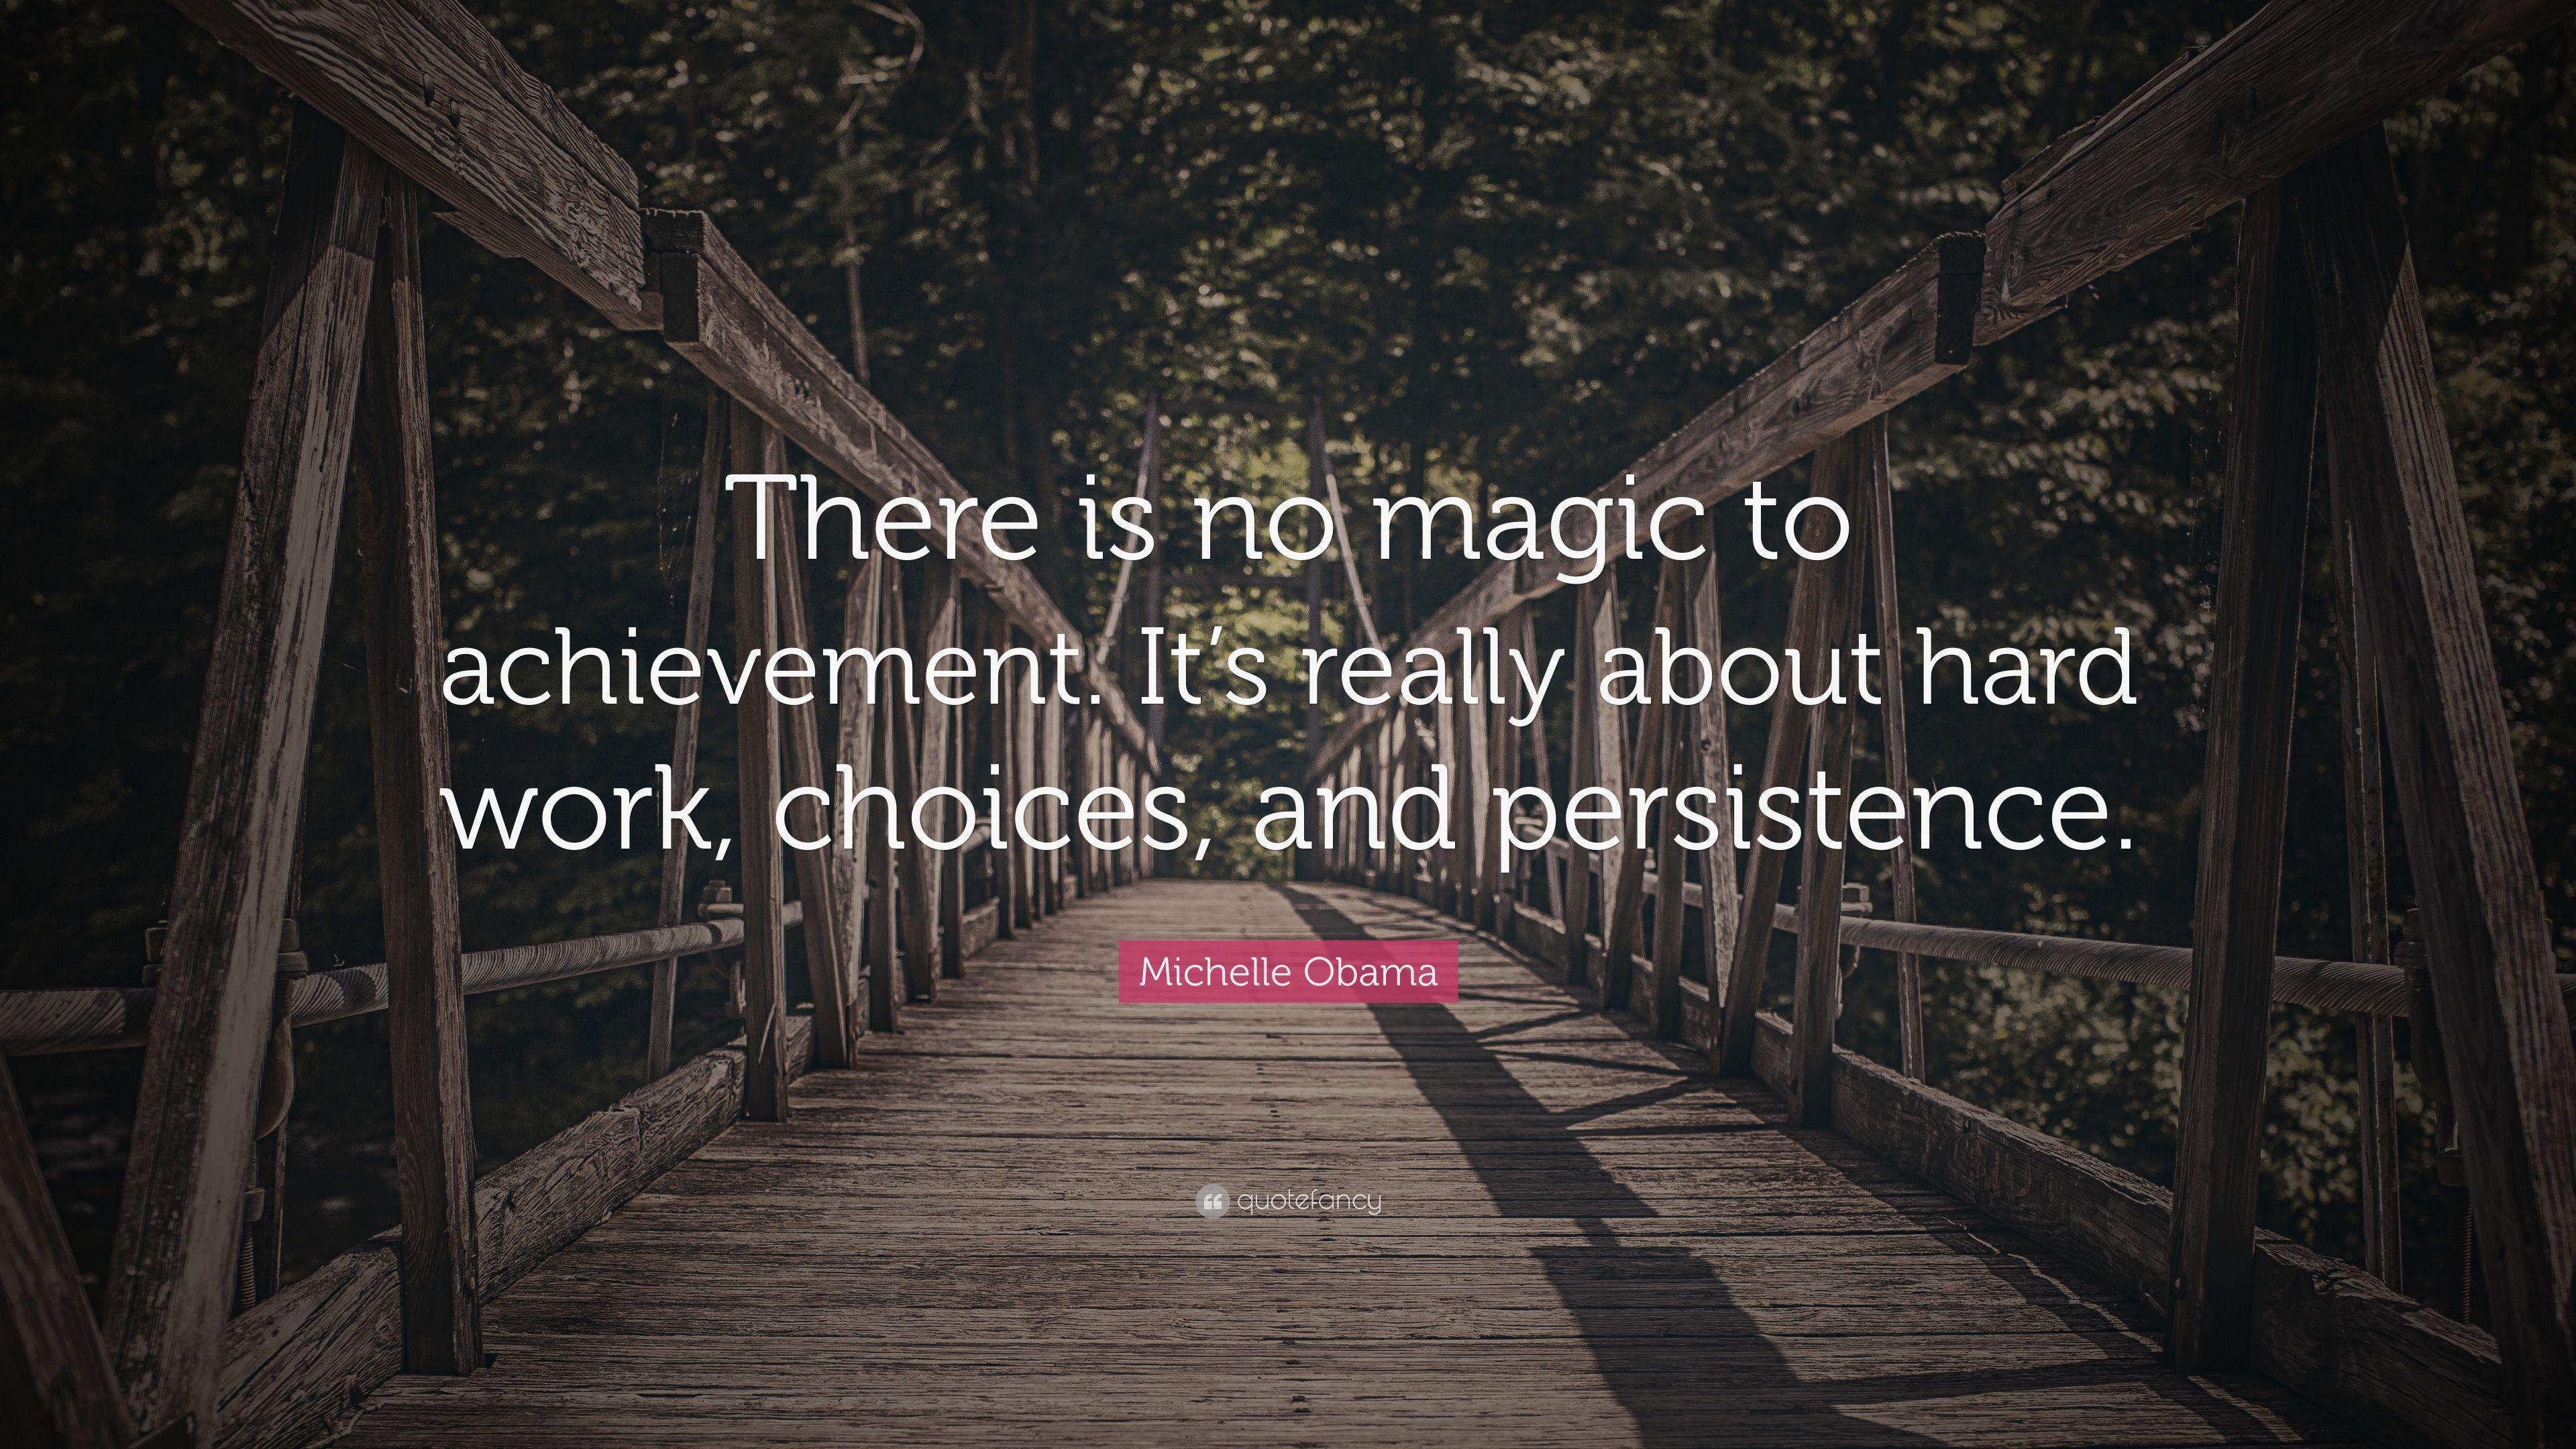 Michelle Obama Quote: “There is no magic to achievement. It&;s